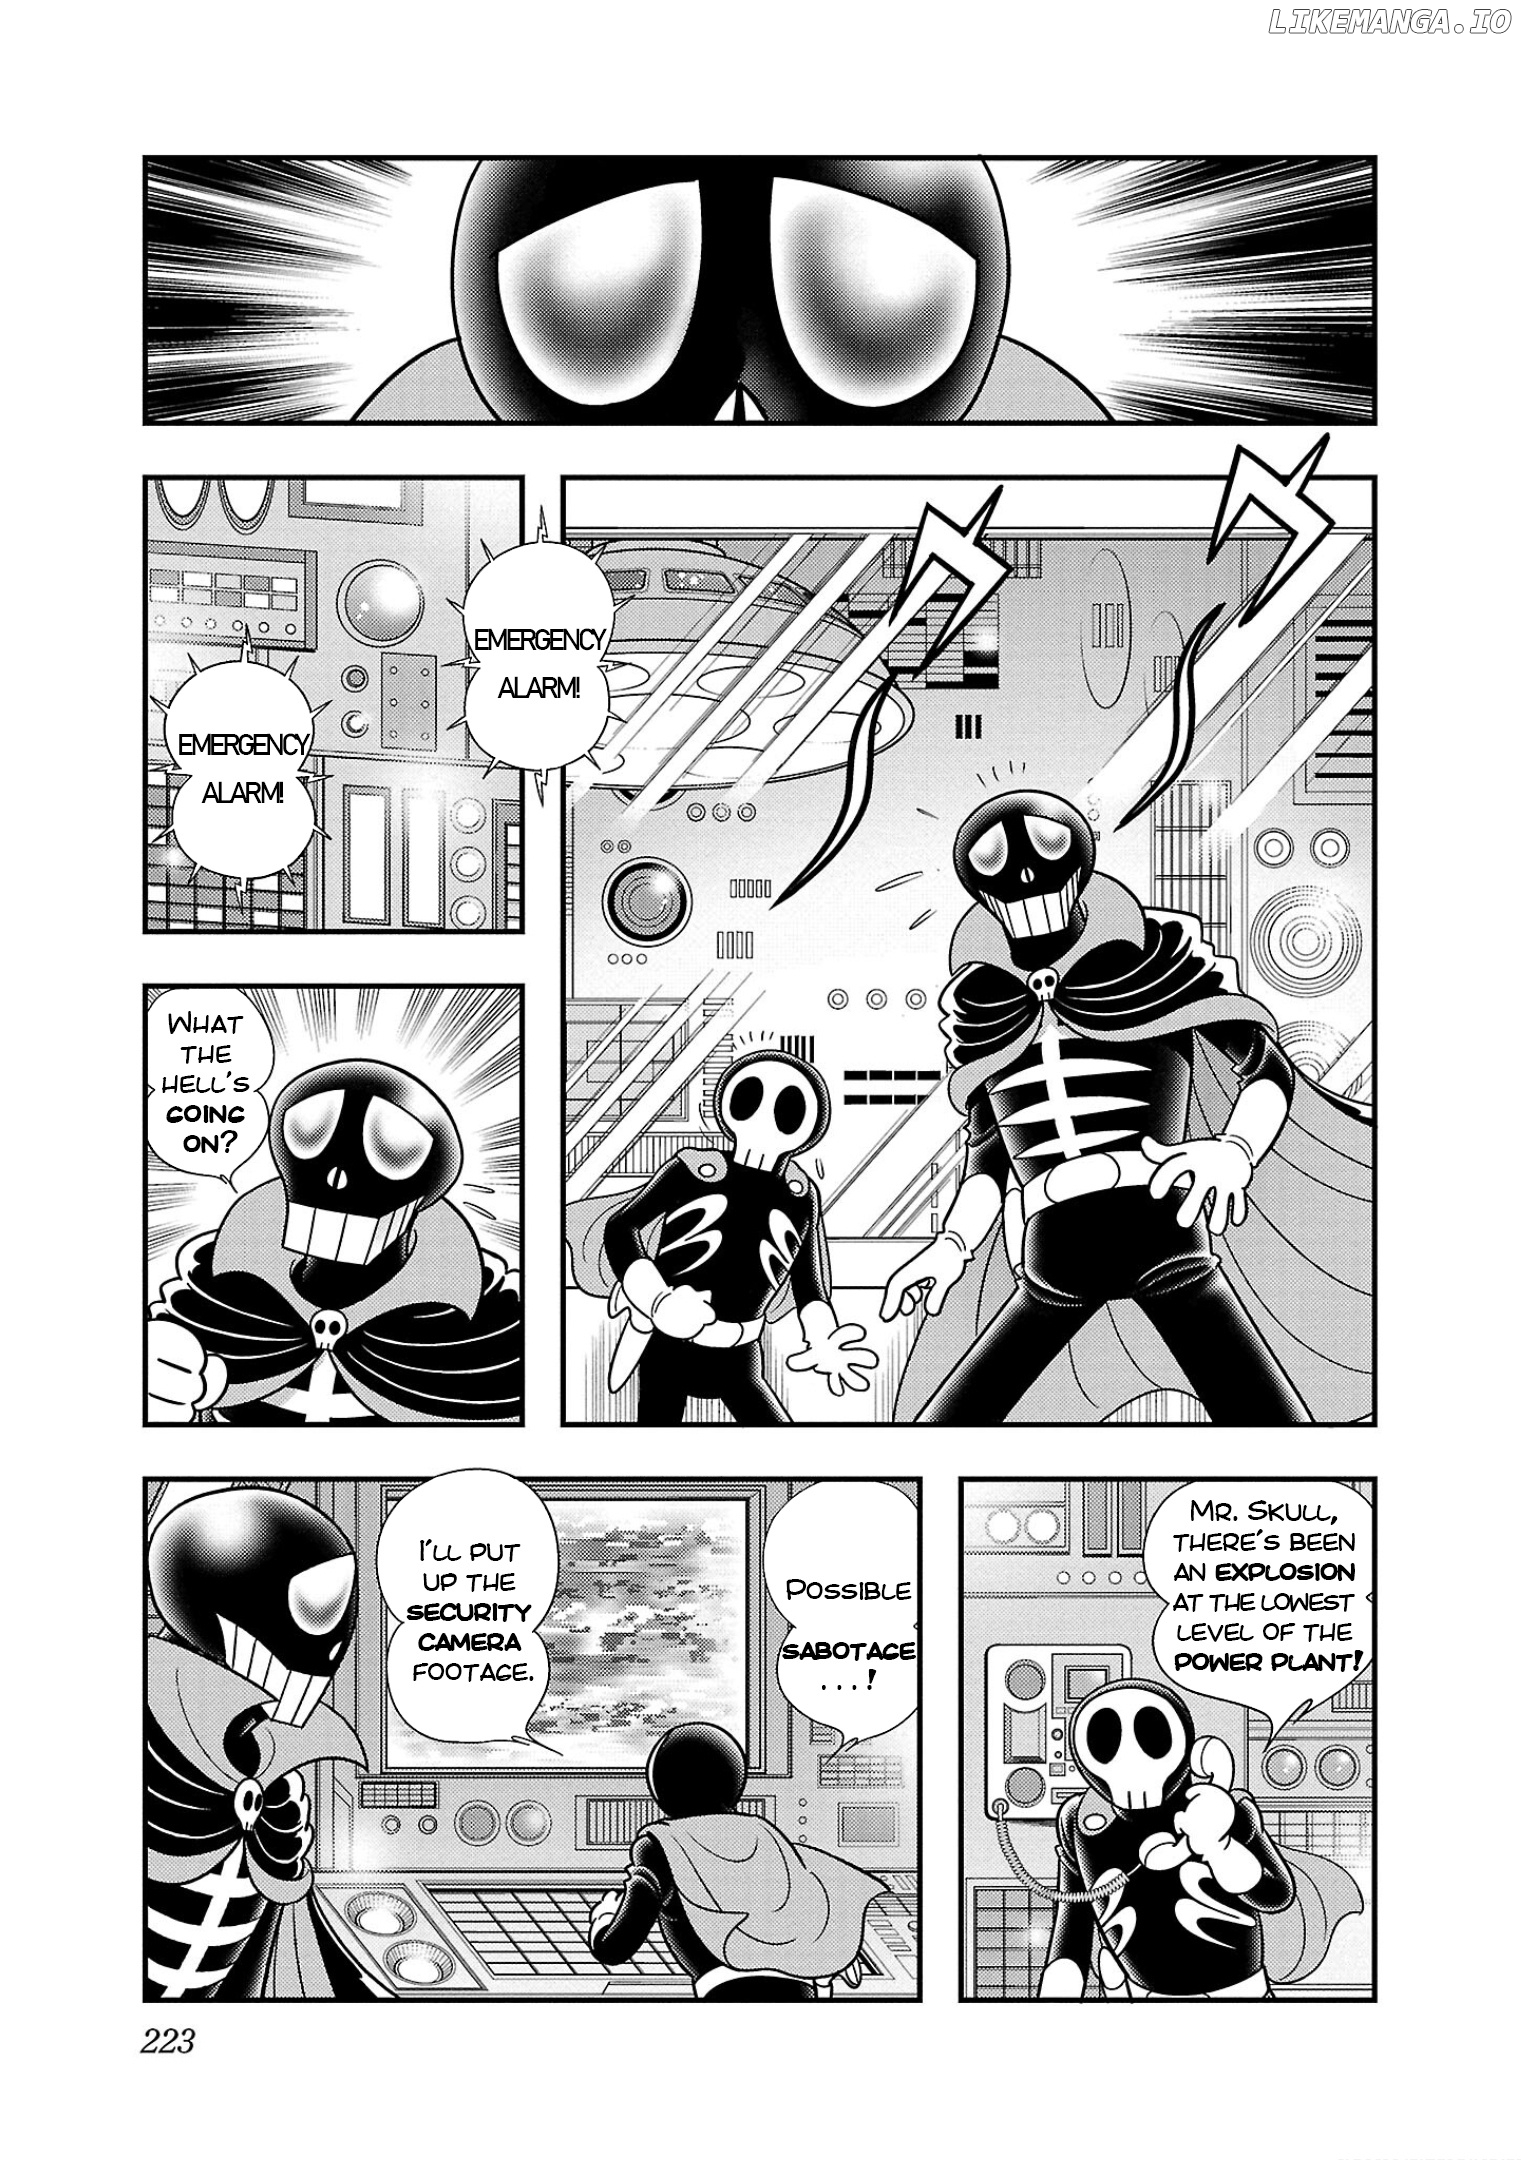 8-Man Vs Cyborg 009 chapter 6 - page 23